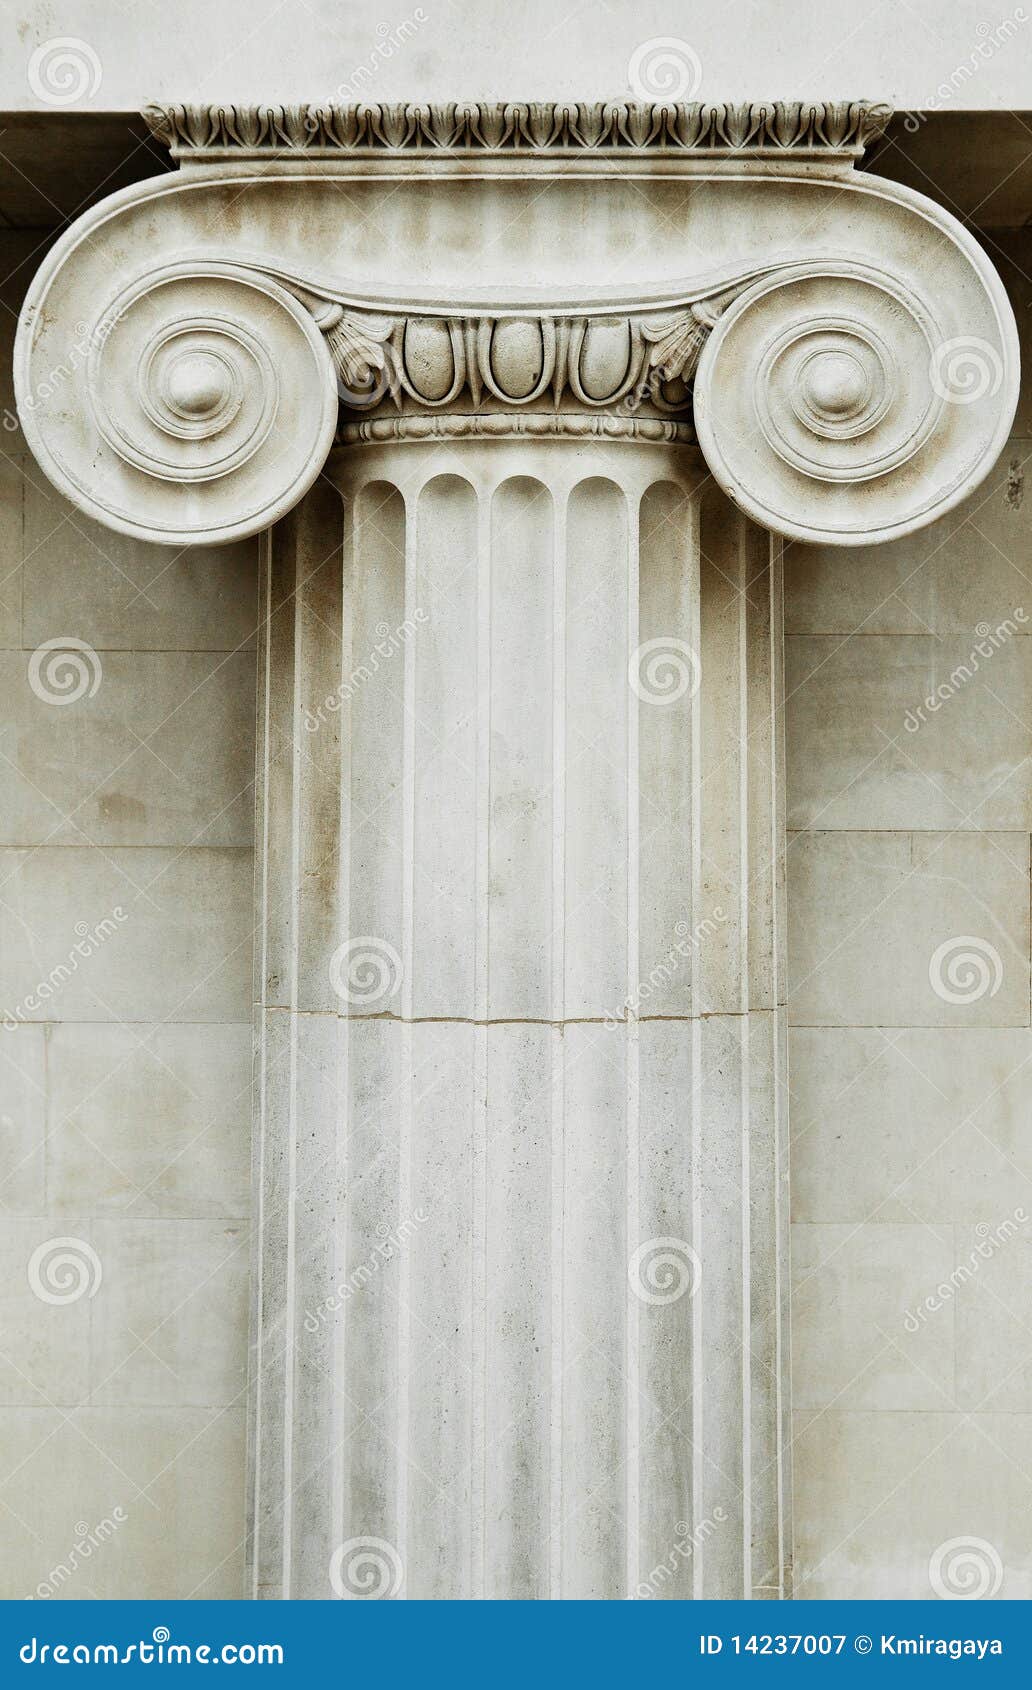 ionic column